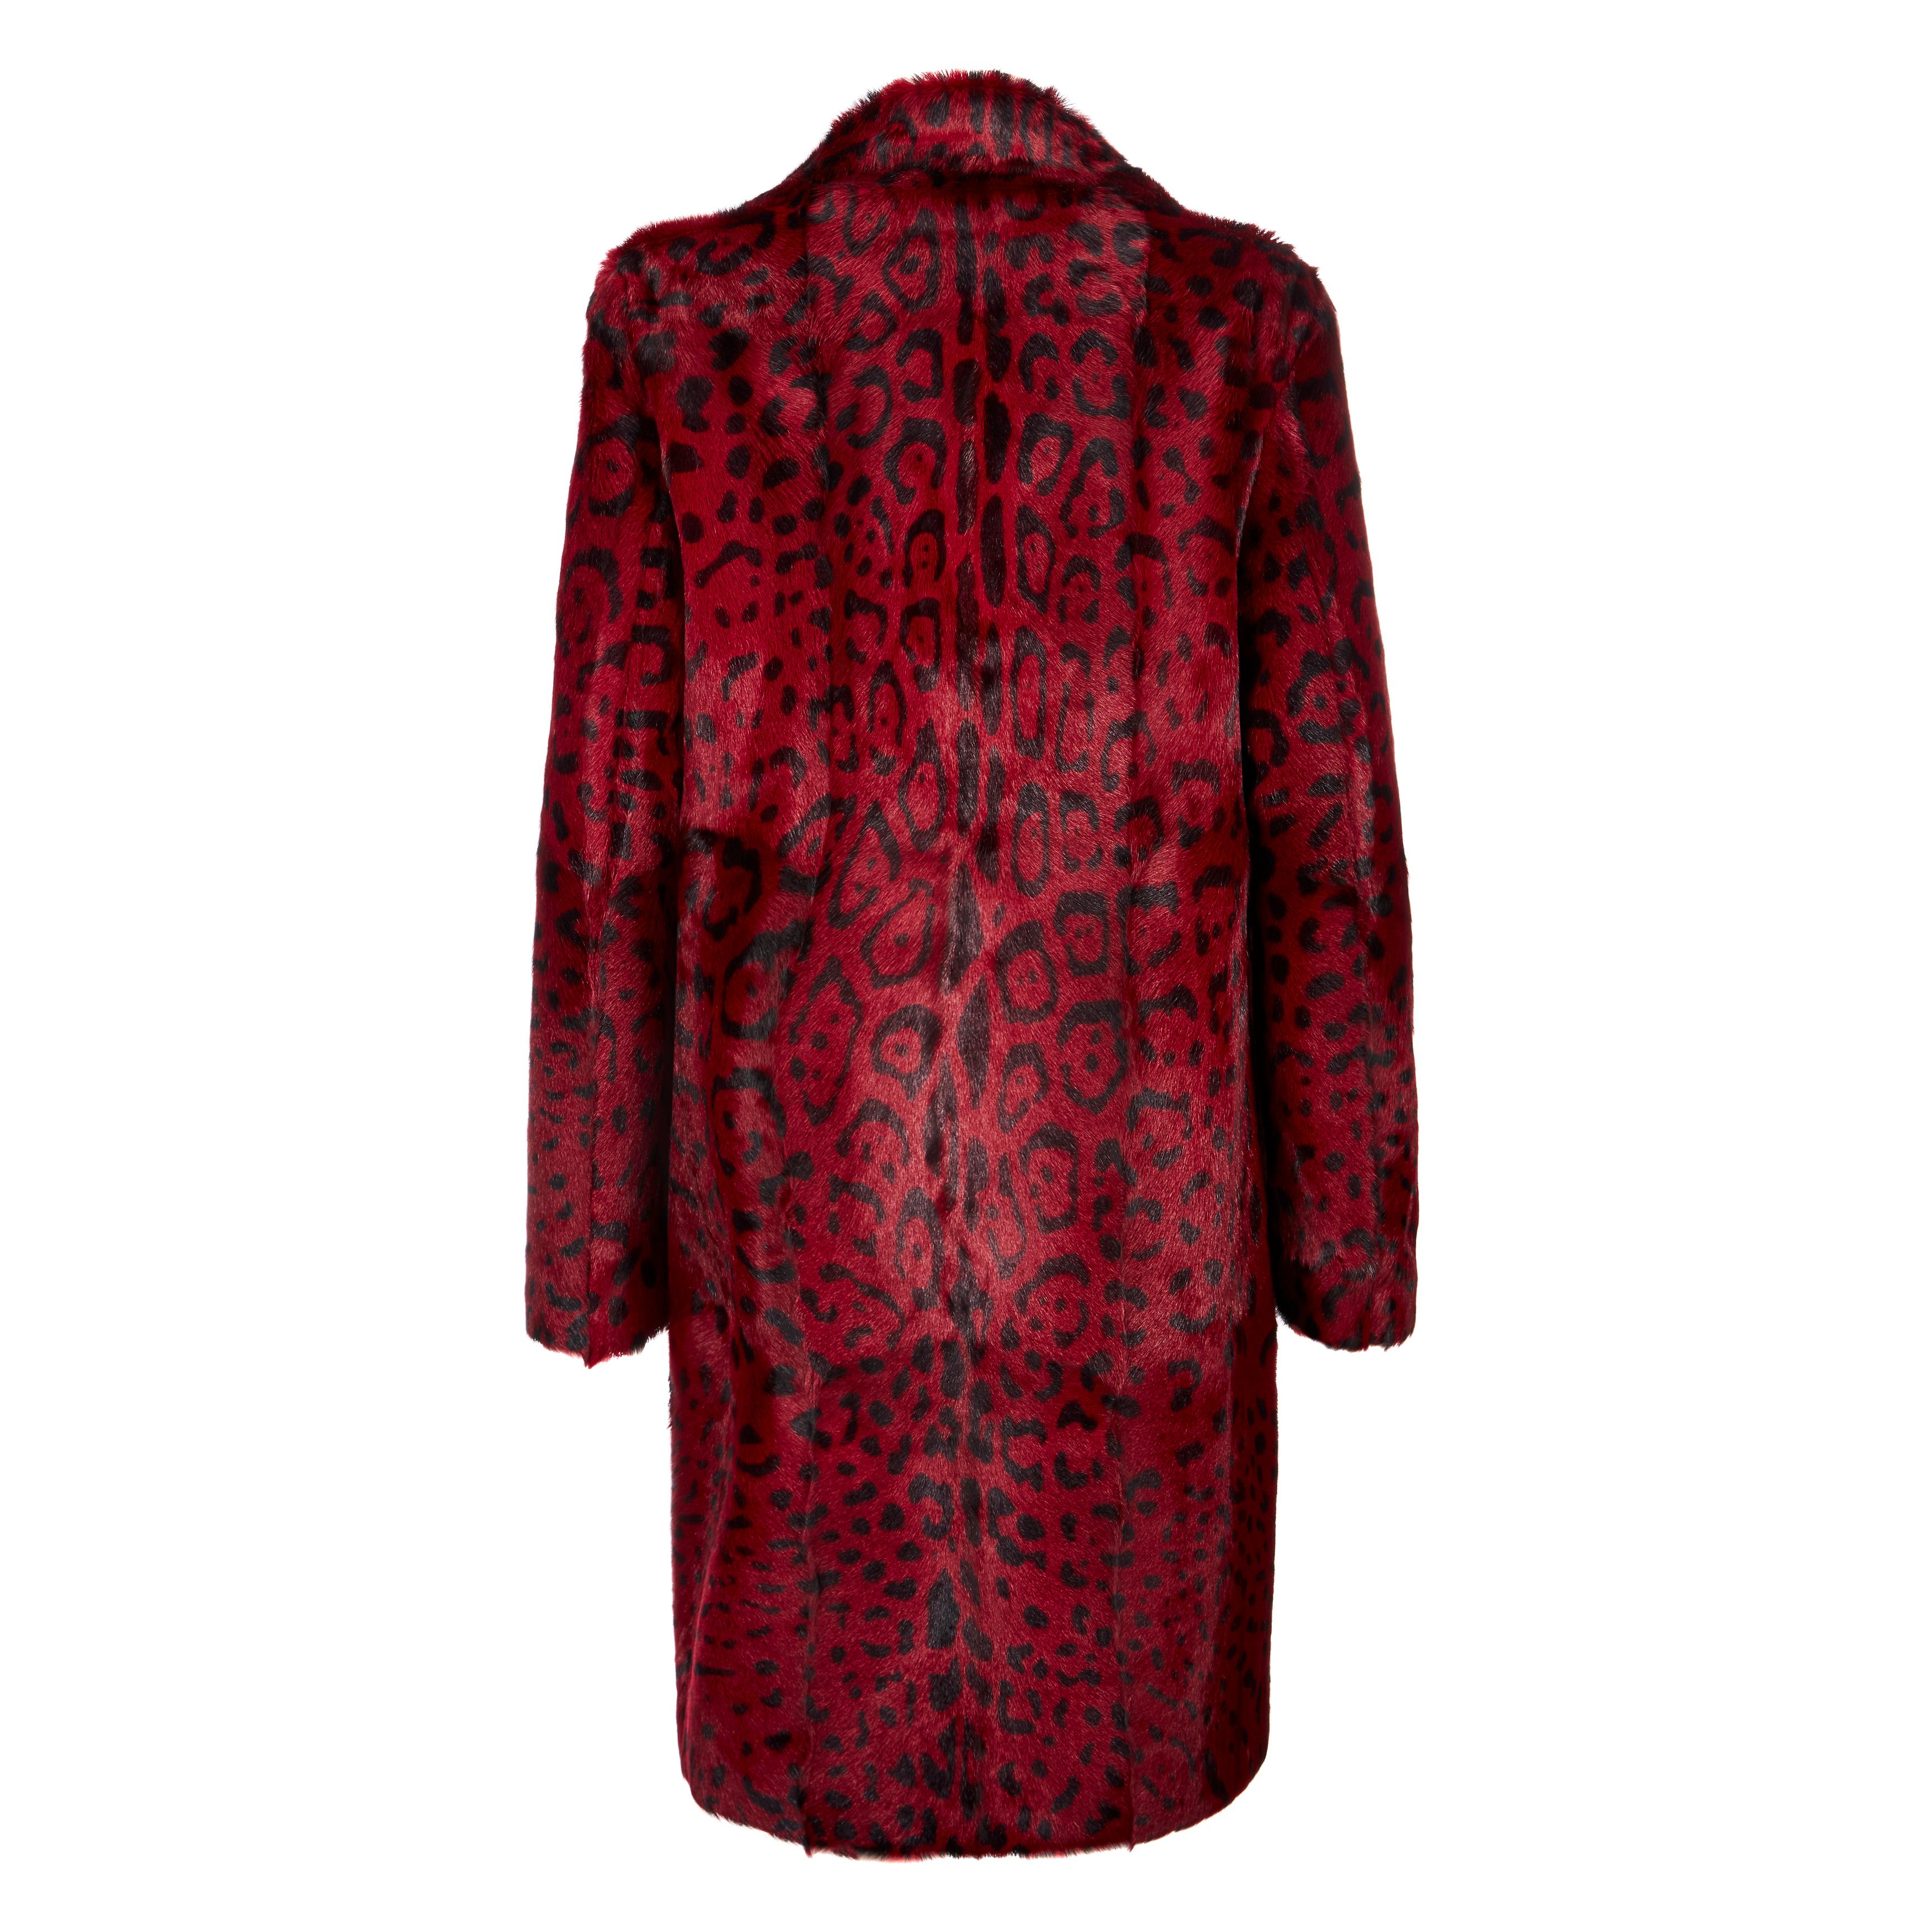 Women's Verheyen London Leopard Print Coat in Red Ruby Goat Hair Fur UK 10 - Brand New  For Sale